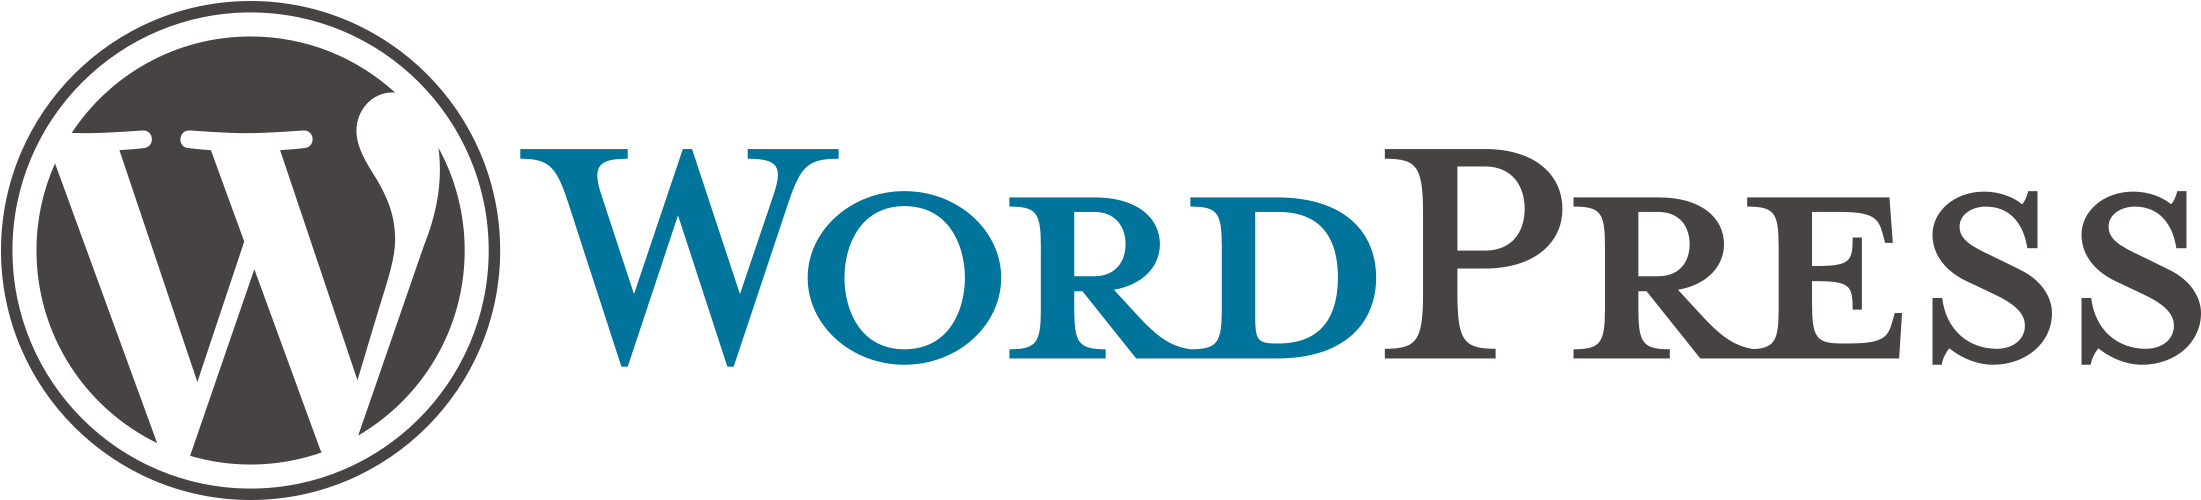 Word Press Logo Blue Gray